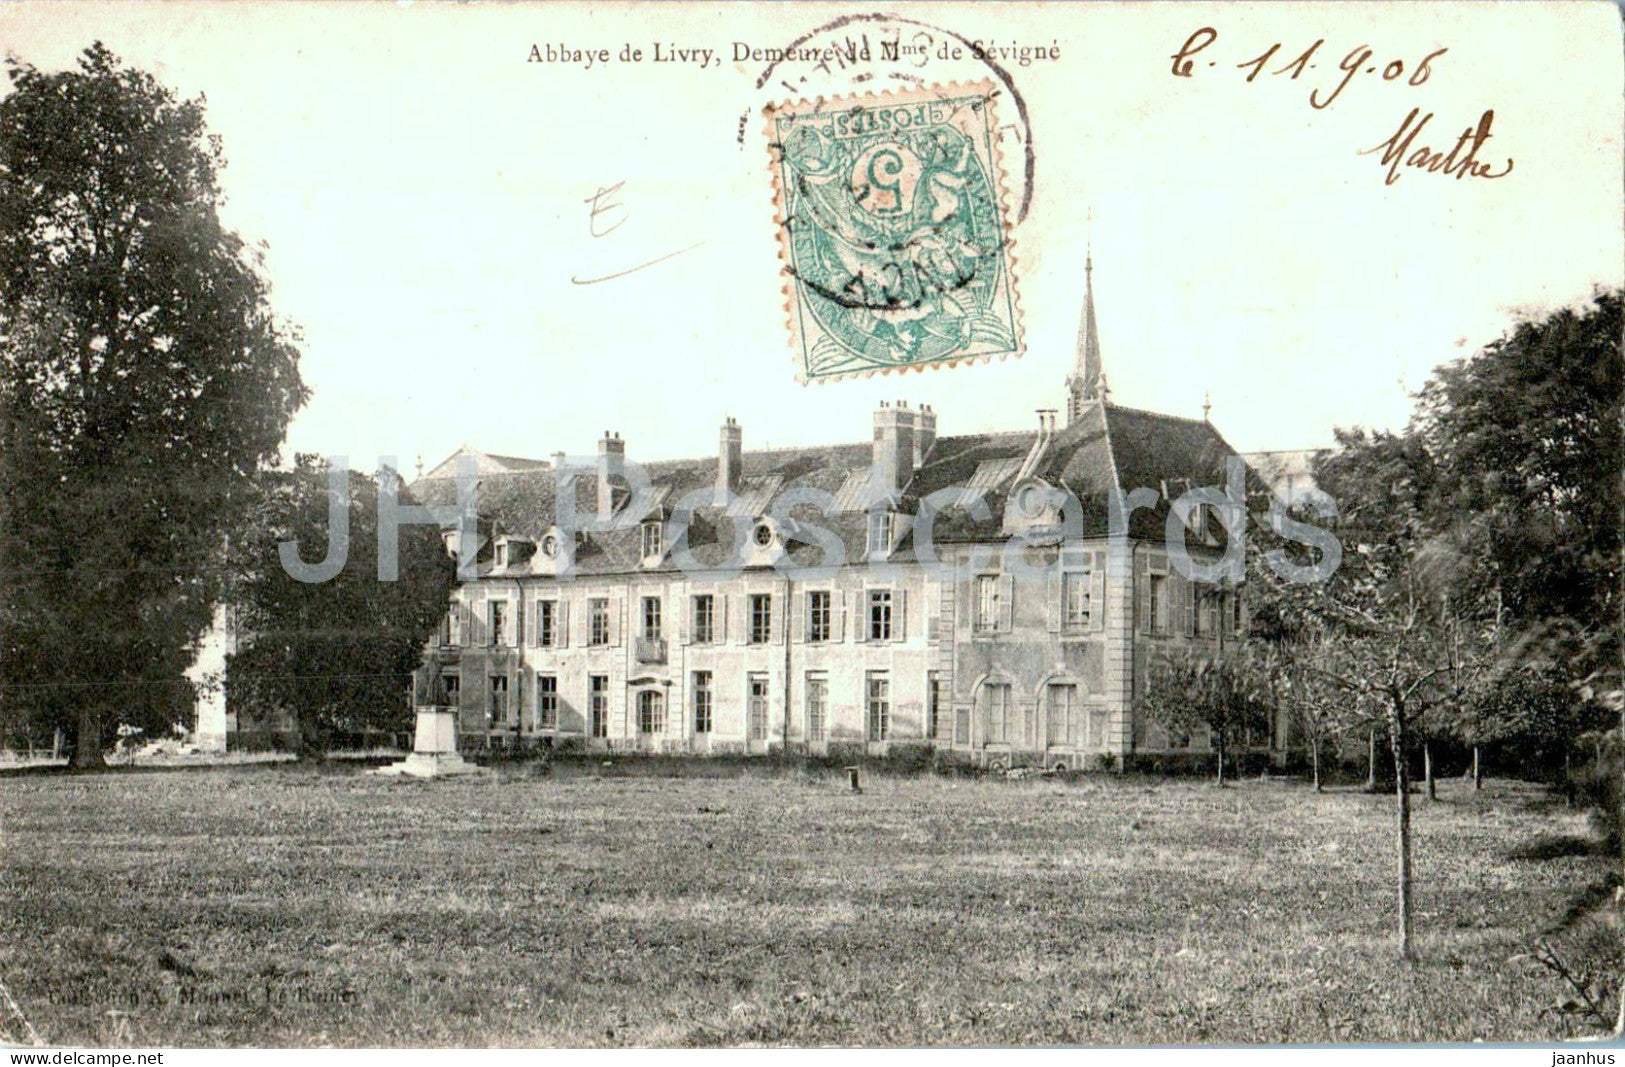 Abbaye de Livry - Demeure de Mme de Sevigne - old postcard - 1906 - France - used - JH Postcards